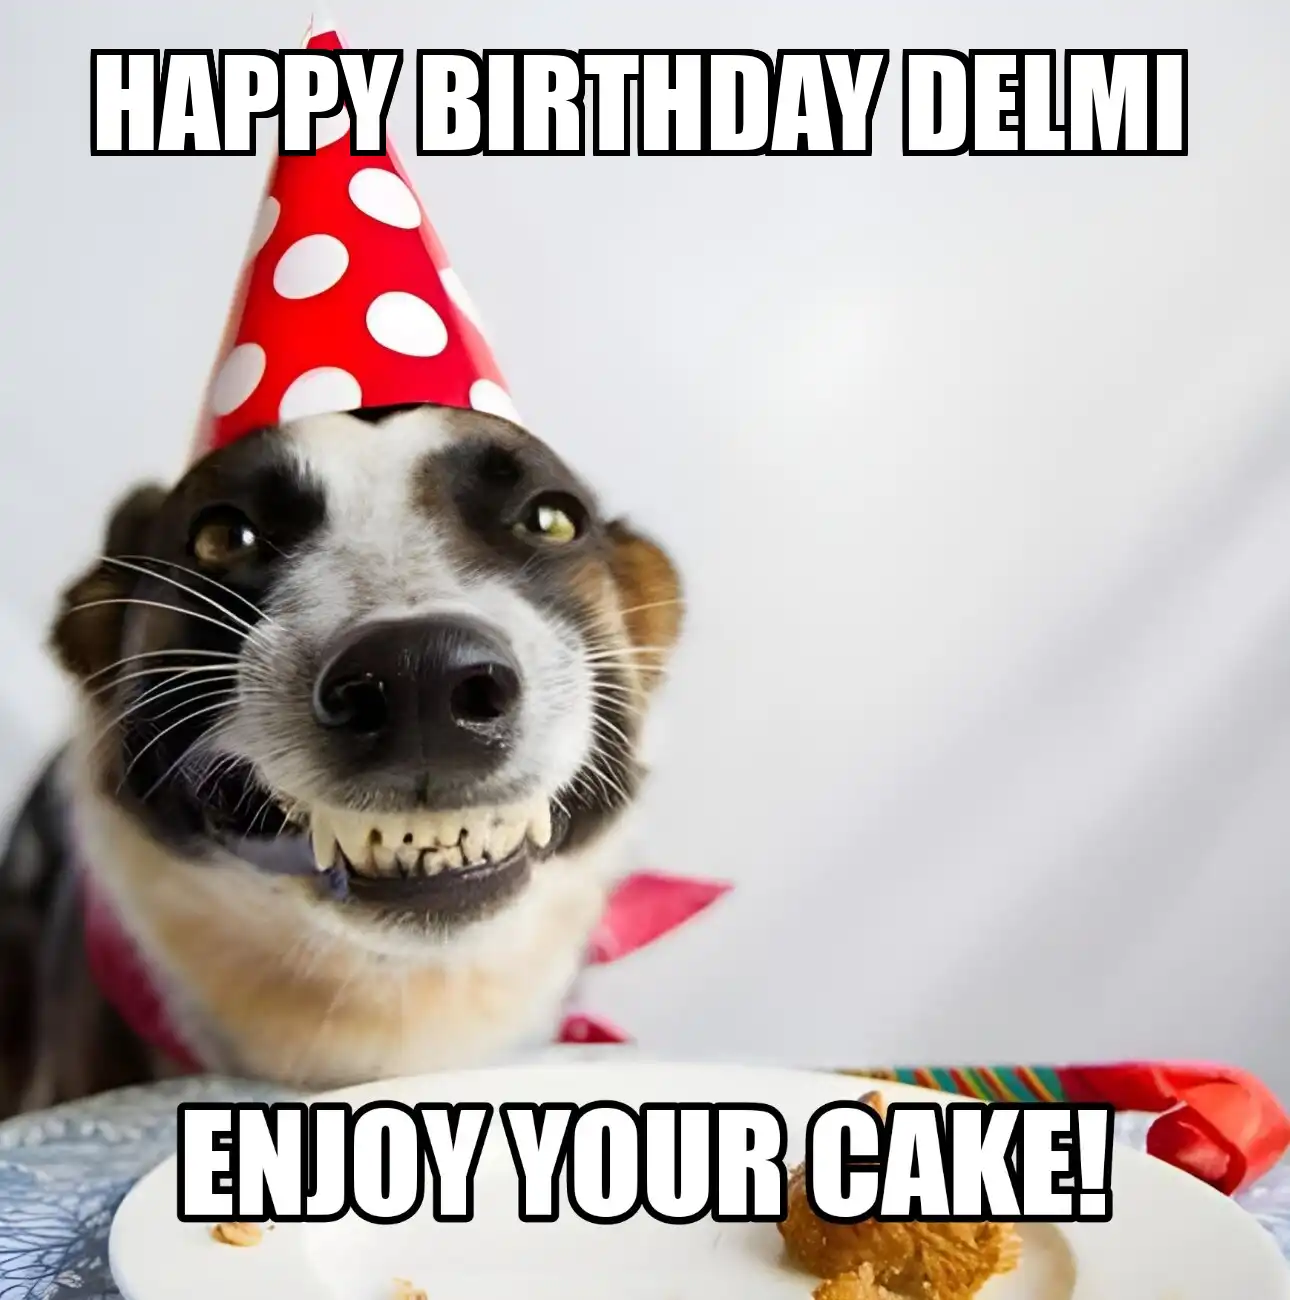 Happy Birthday Delmi Enjoy Your Cake Dog Meme